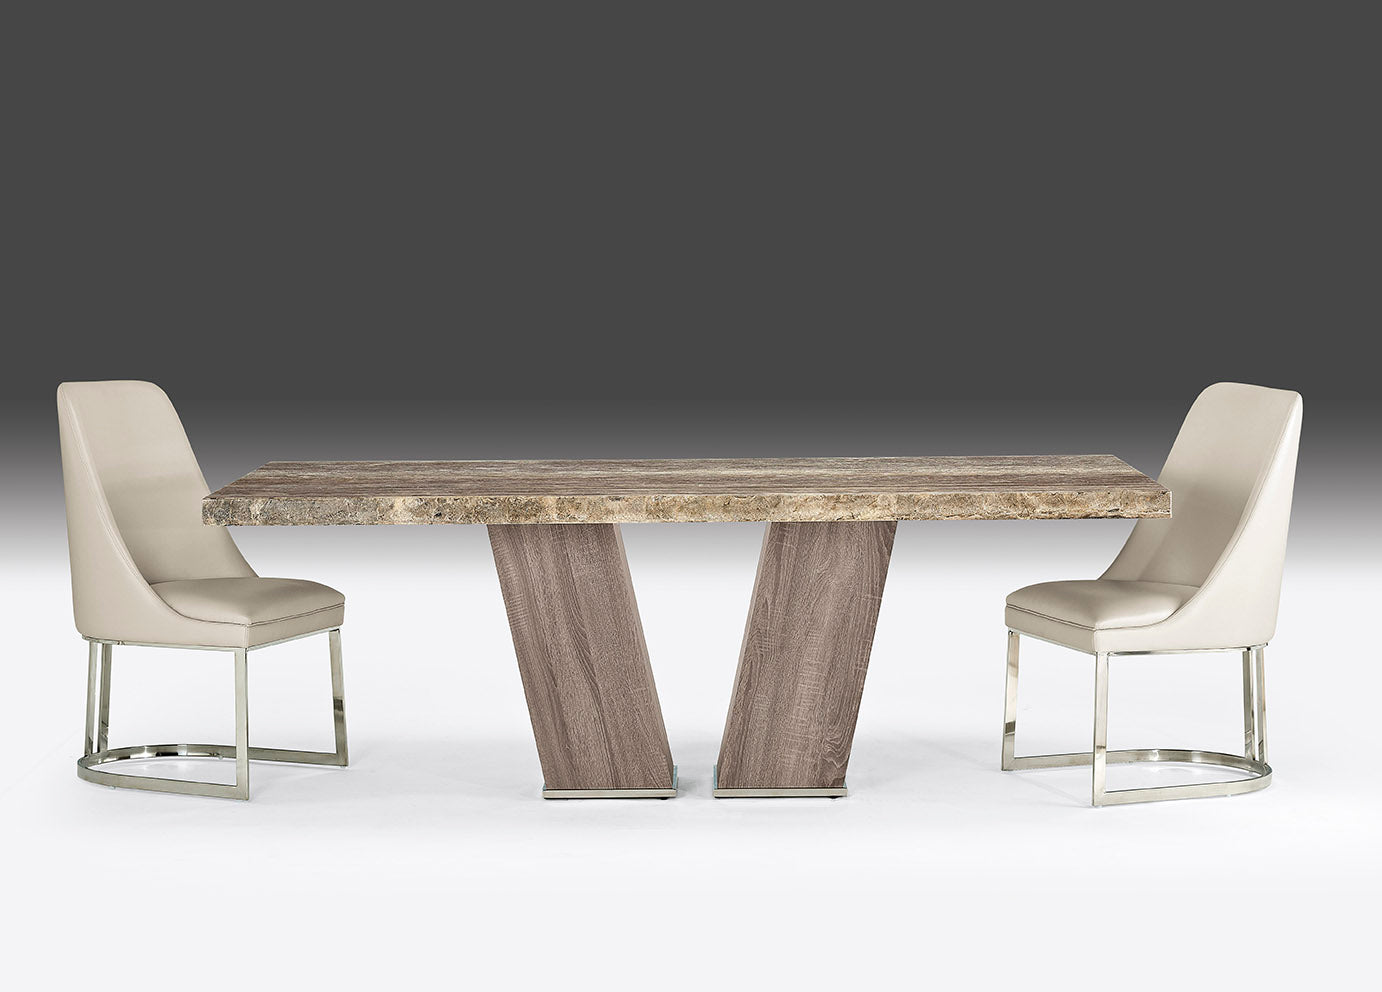 Italy-Made Marble Dining Table | VERTIGO by Stone International